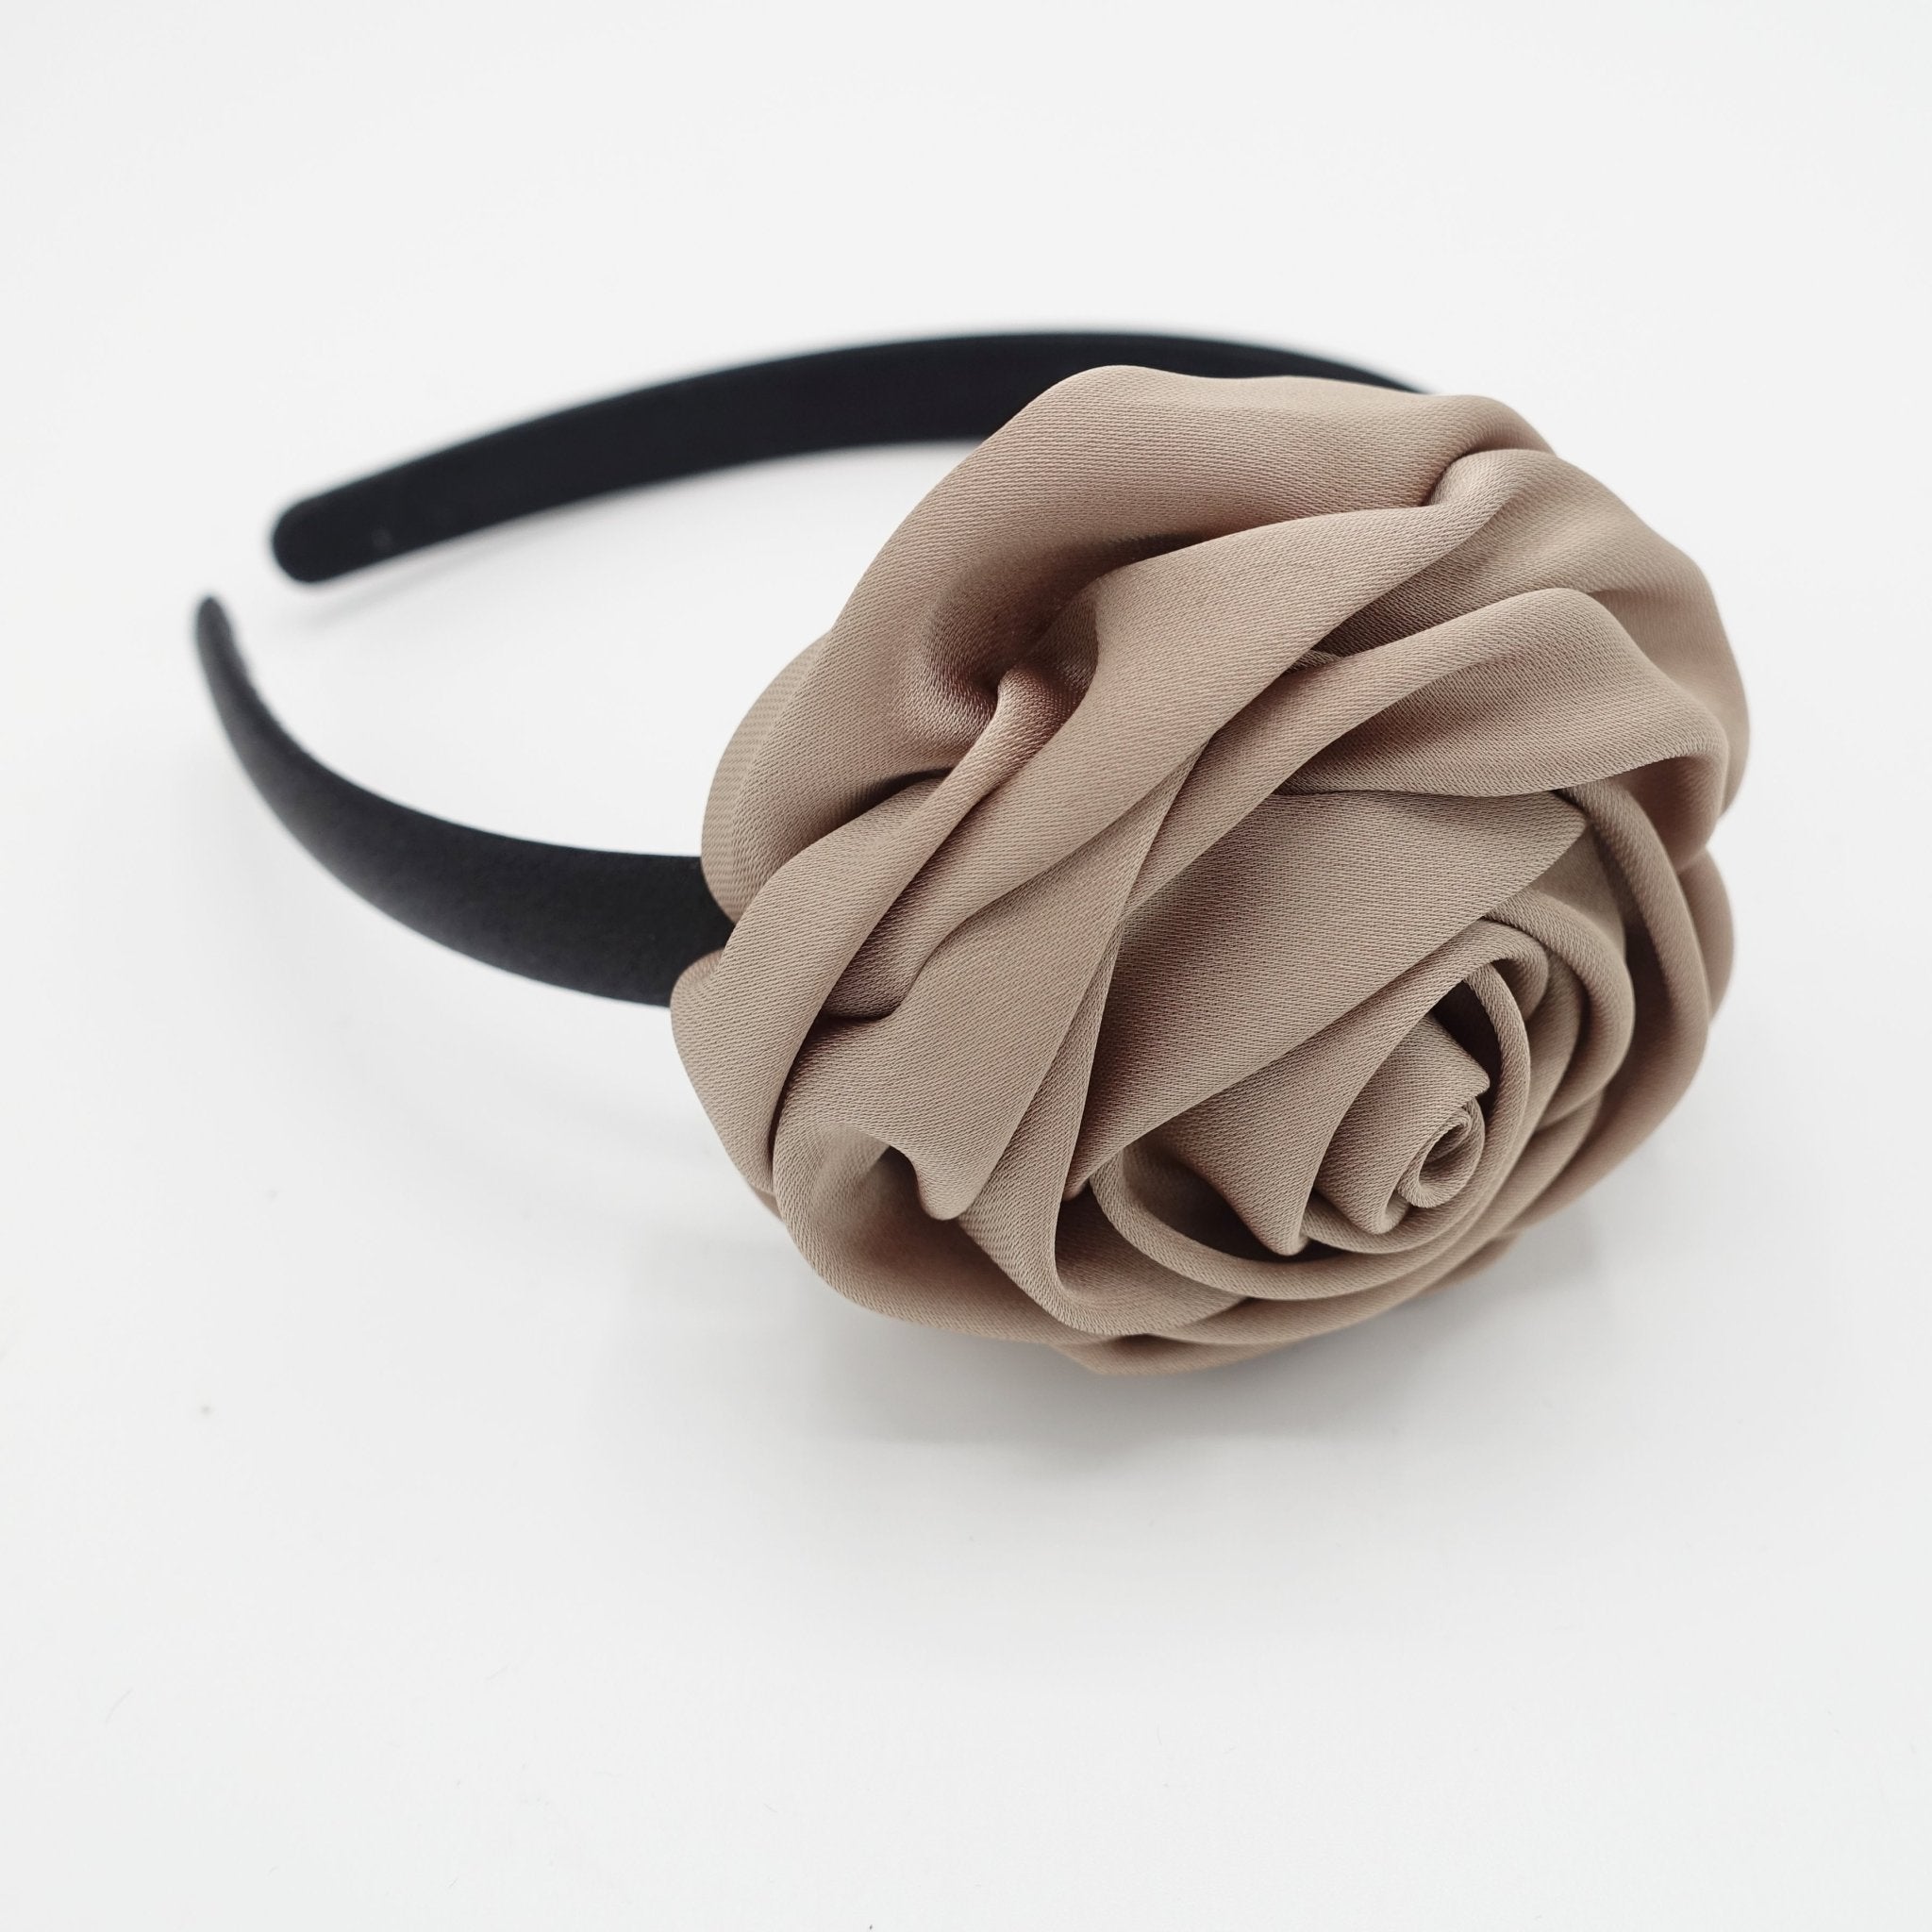 veryshine.com hairband/headband Beige satin rose decorated black satin headband flower hairband simple women hair accessory